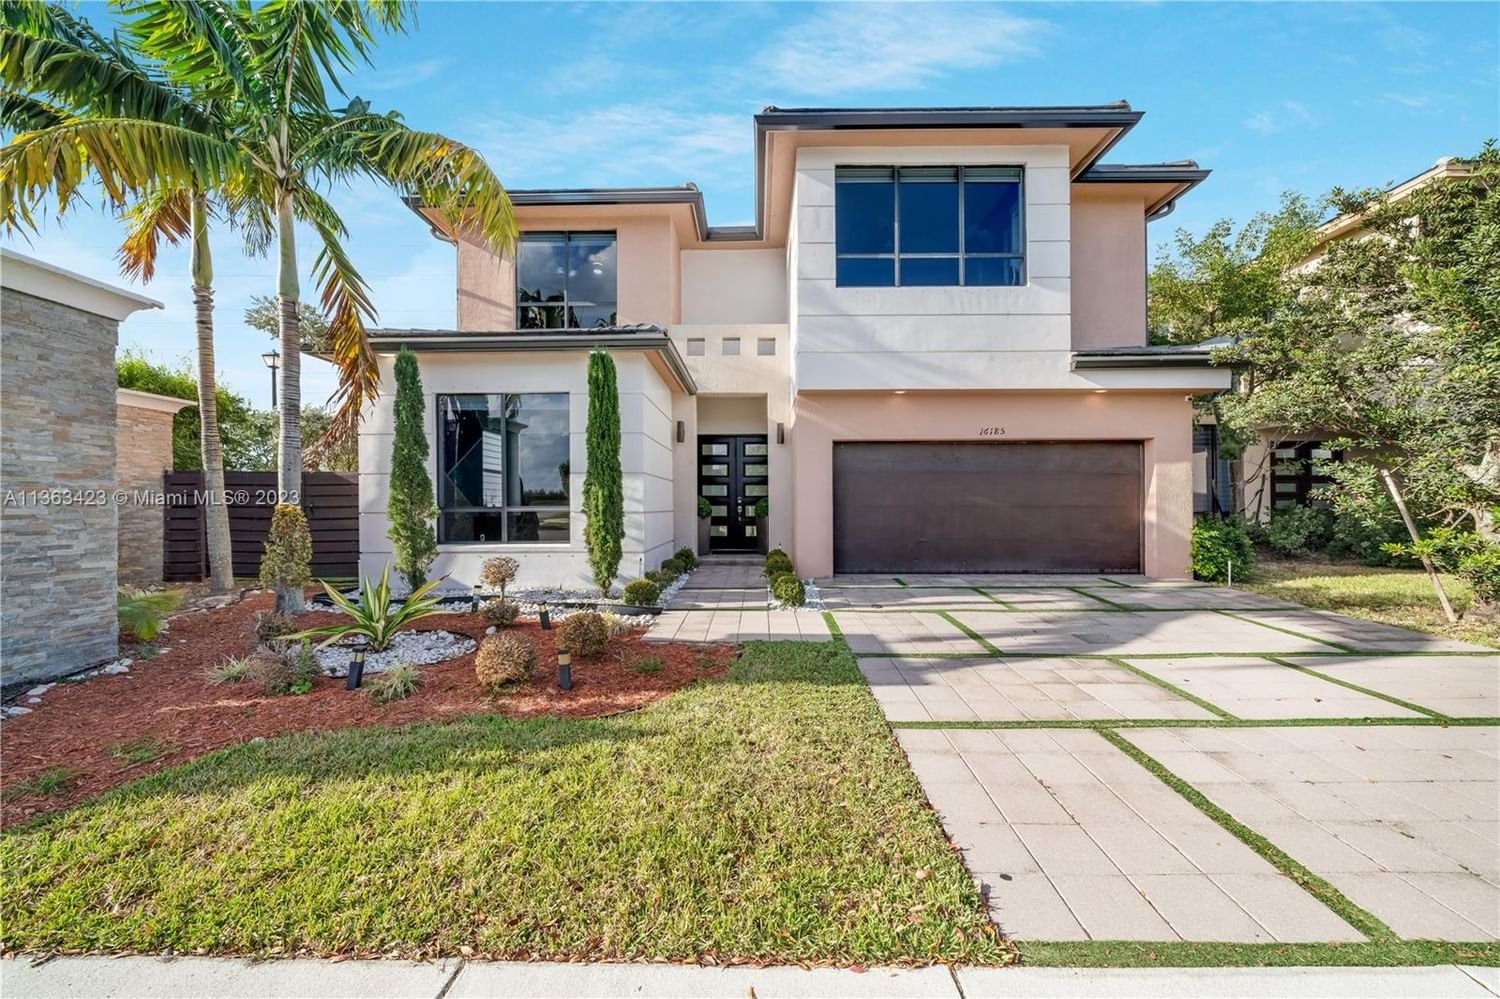 Real estate property located at 16185 136th Ter, Miami-Dade County, Miami, FL